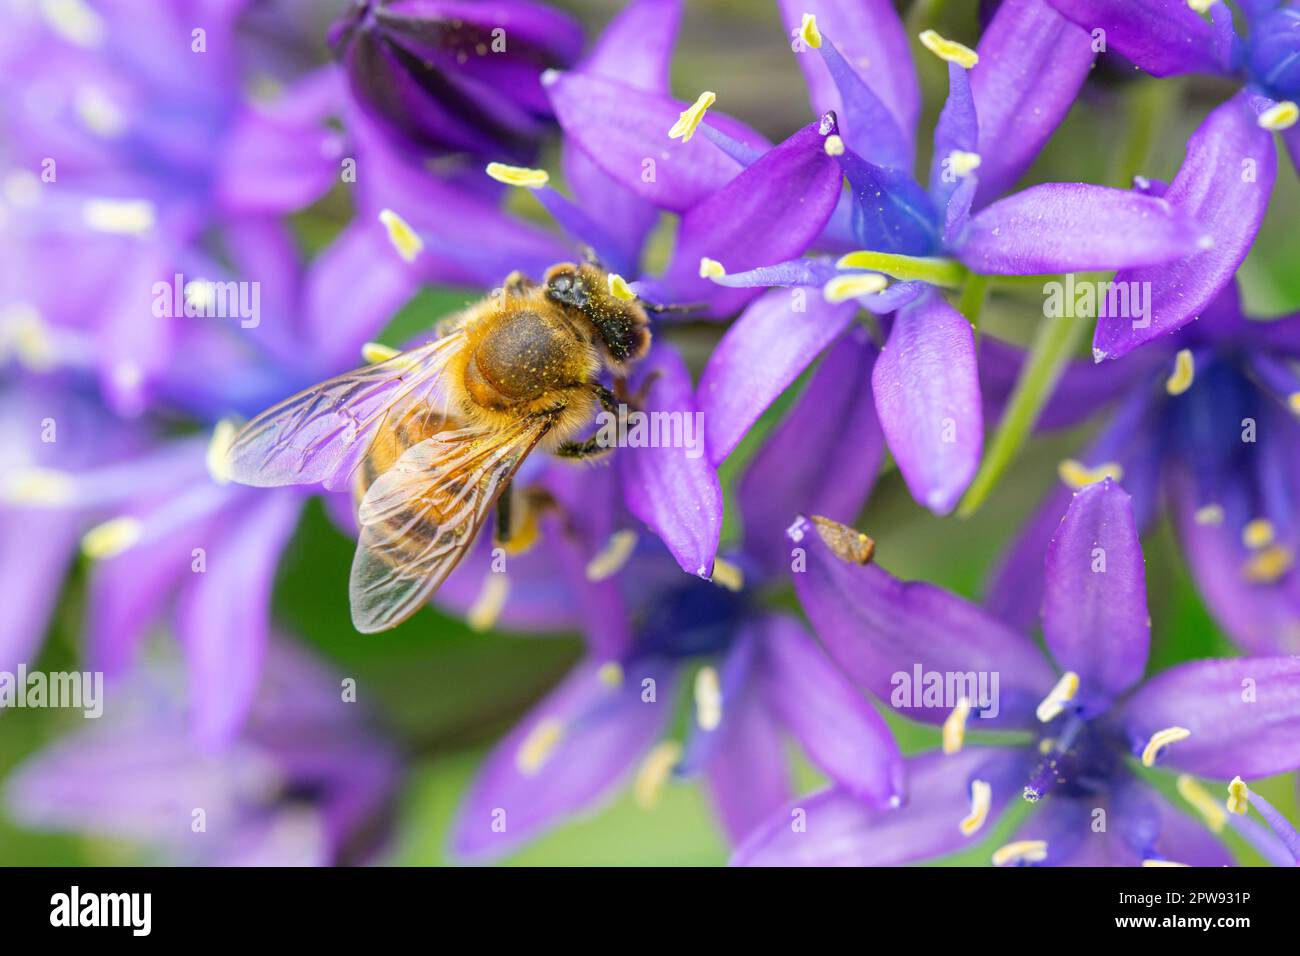 Honey bee gathering pollen on purple flowers Stock Photo